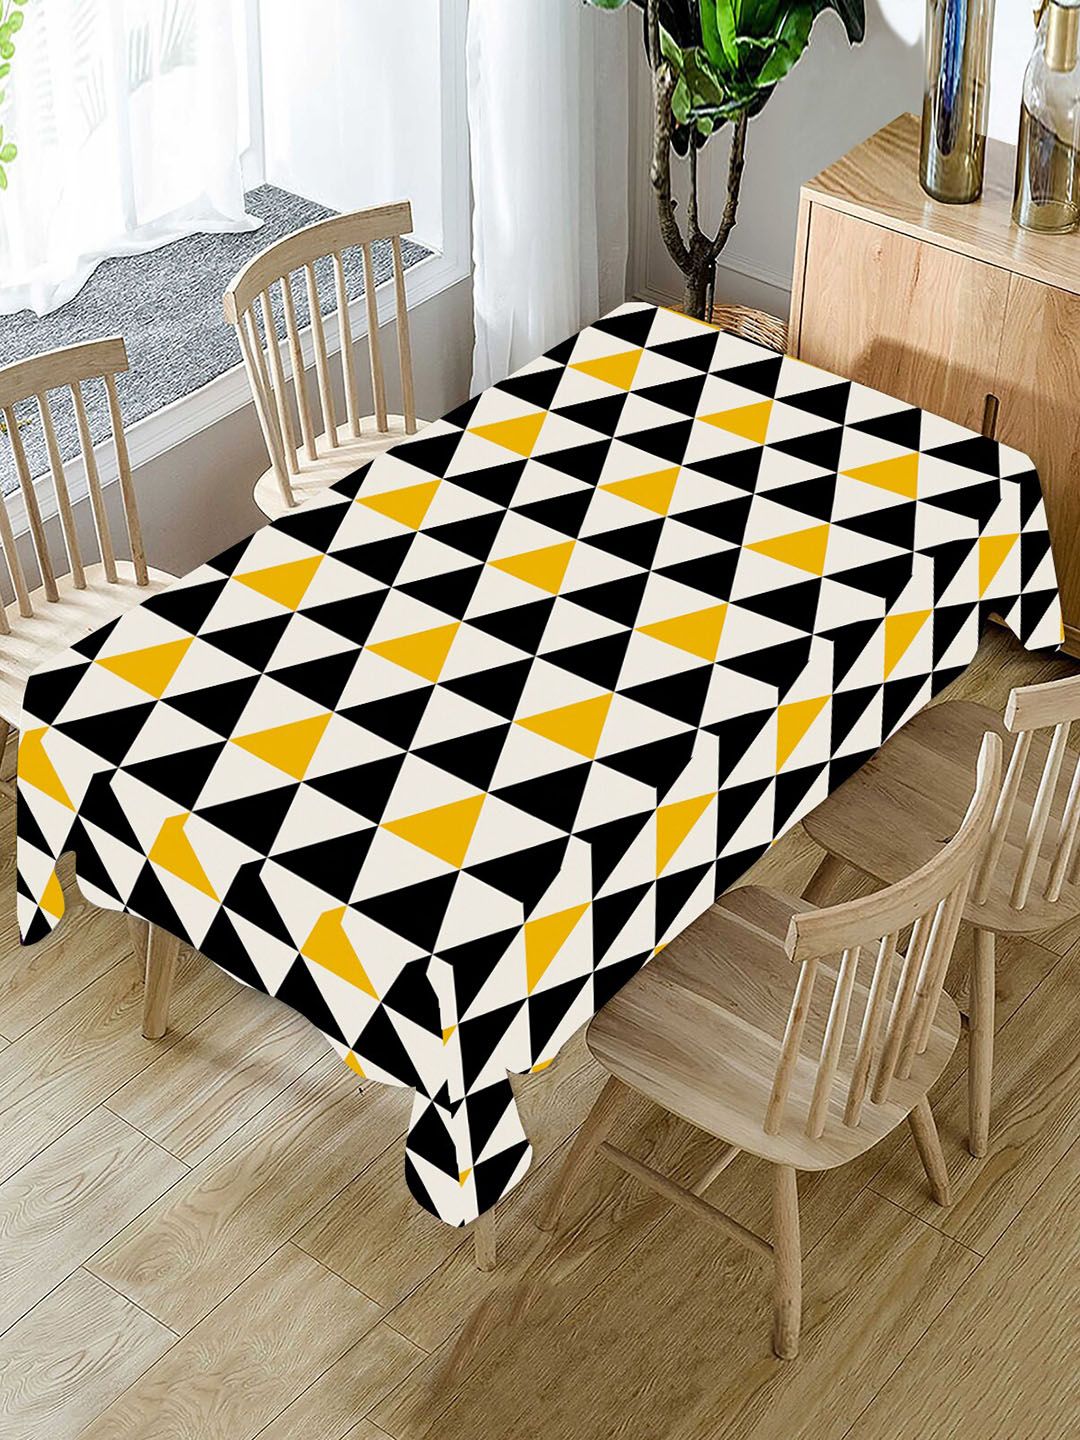 AEROHAVEN Multicoloured Geometric Cotton 4-Seater Table Cover Price in India